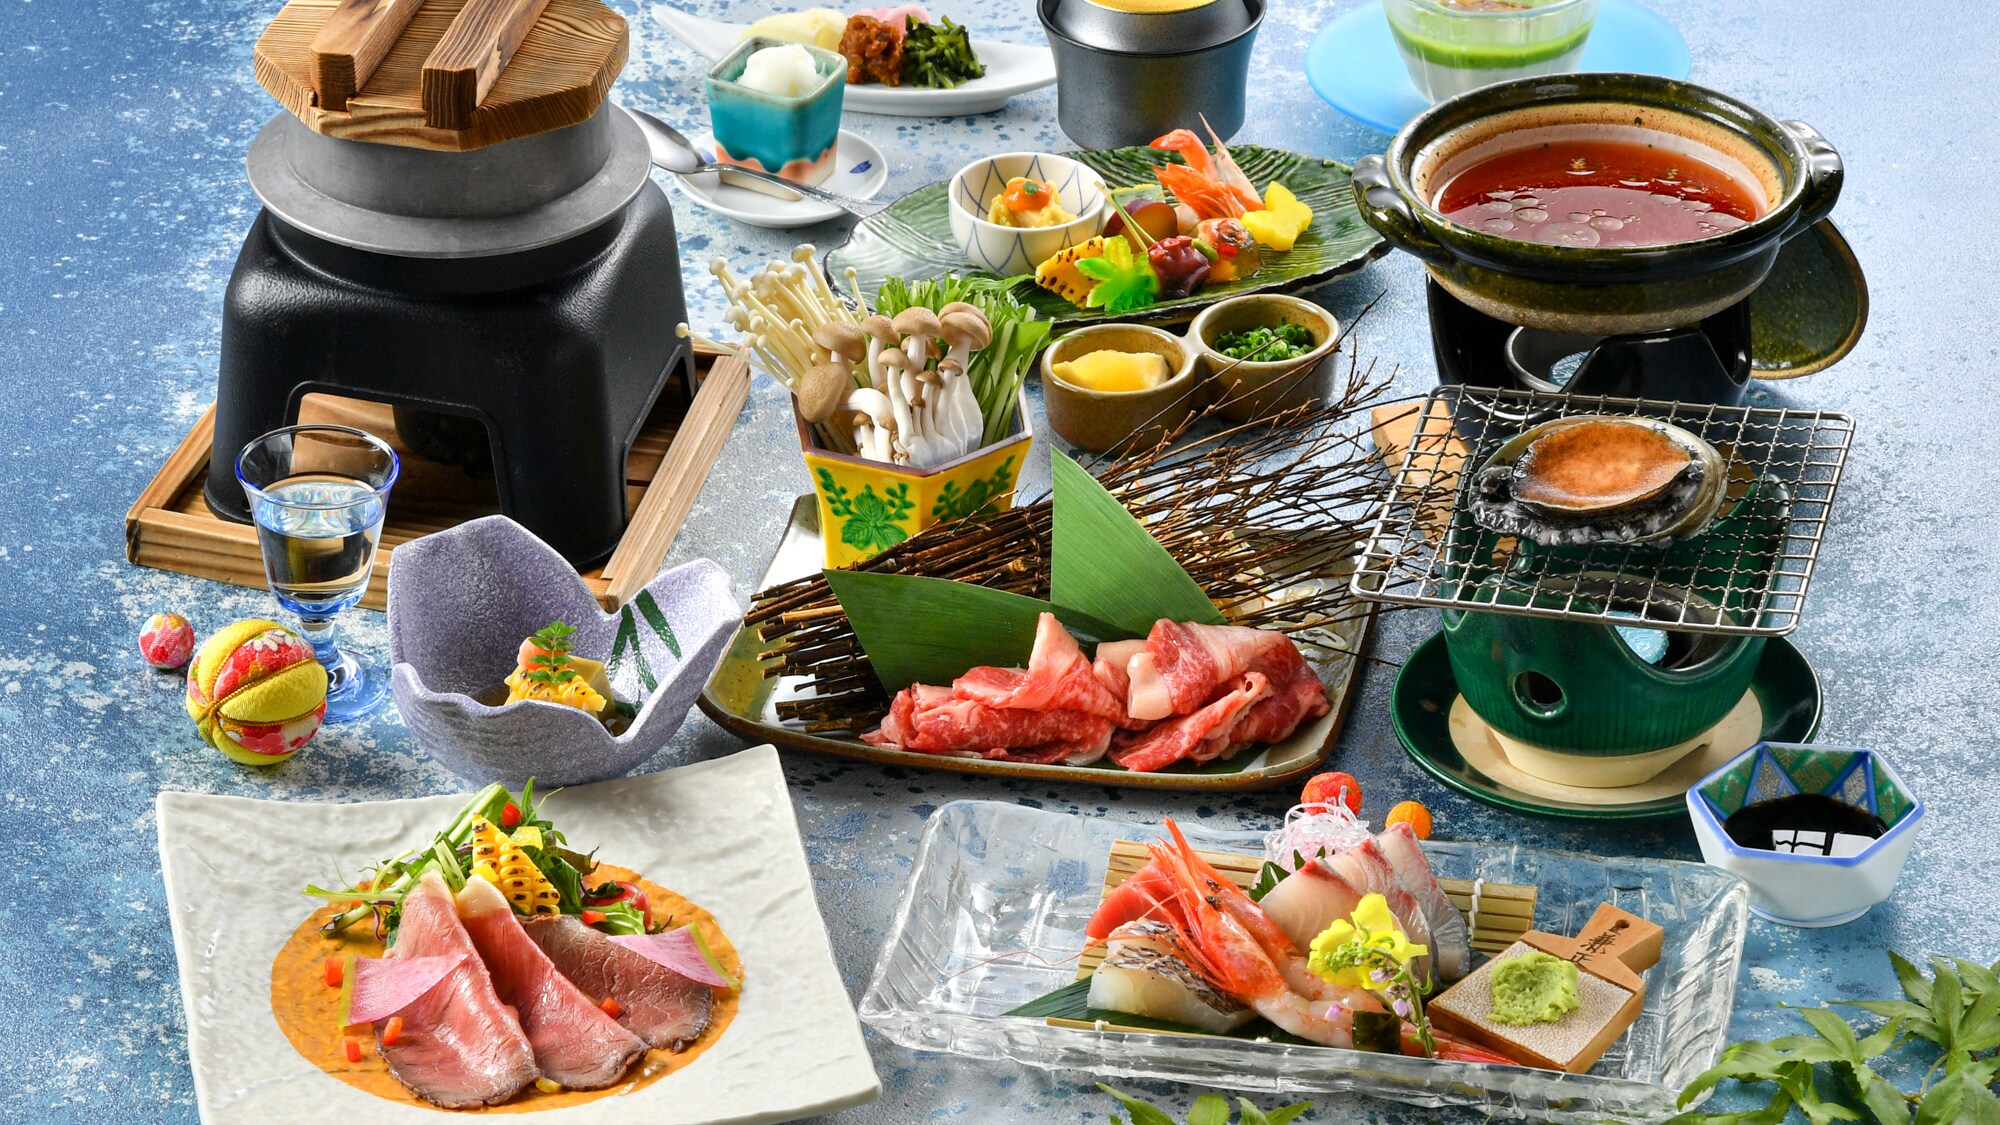 [Meal] Summer basic kaiseki meal (image)